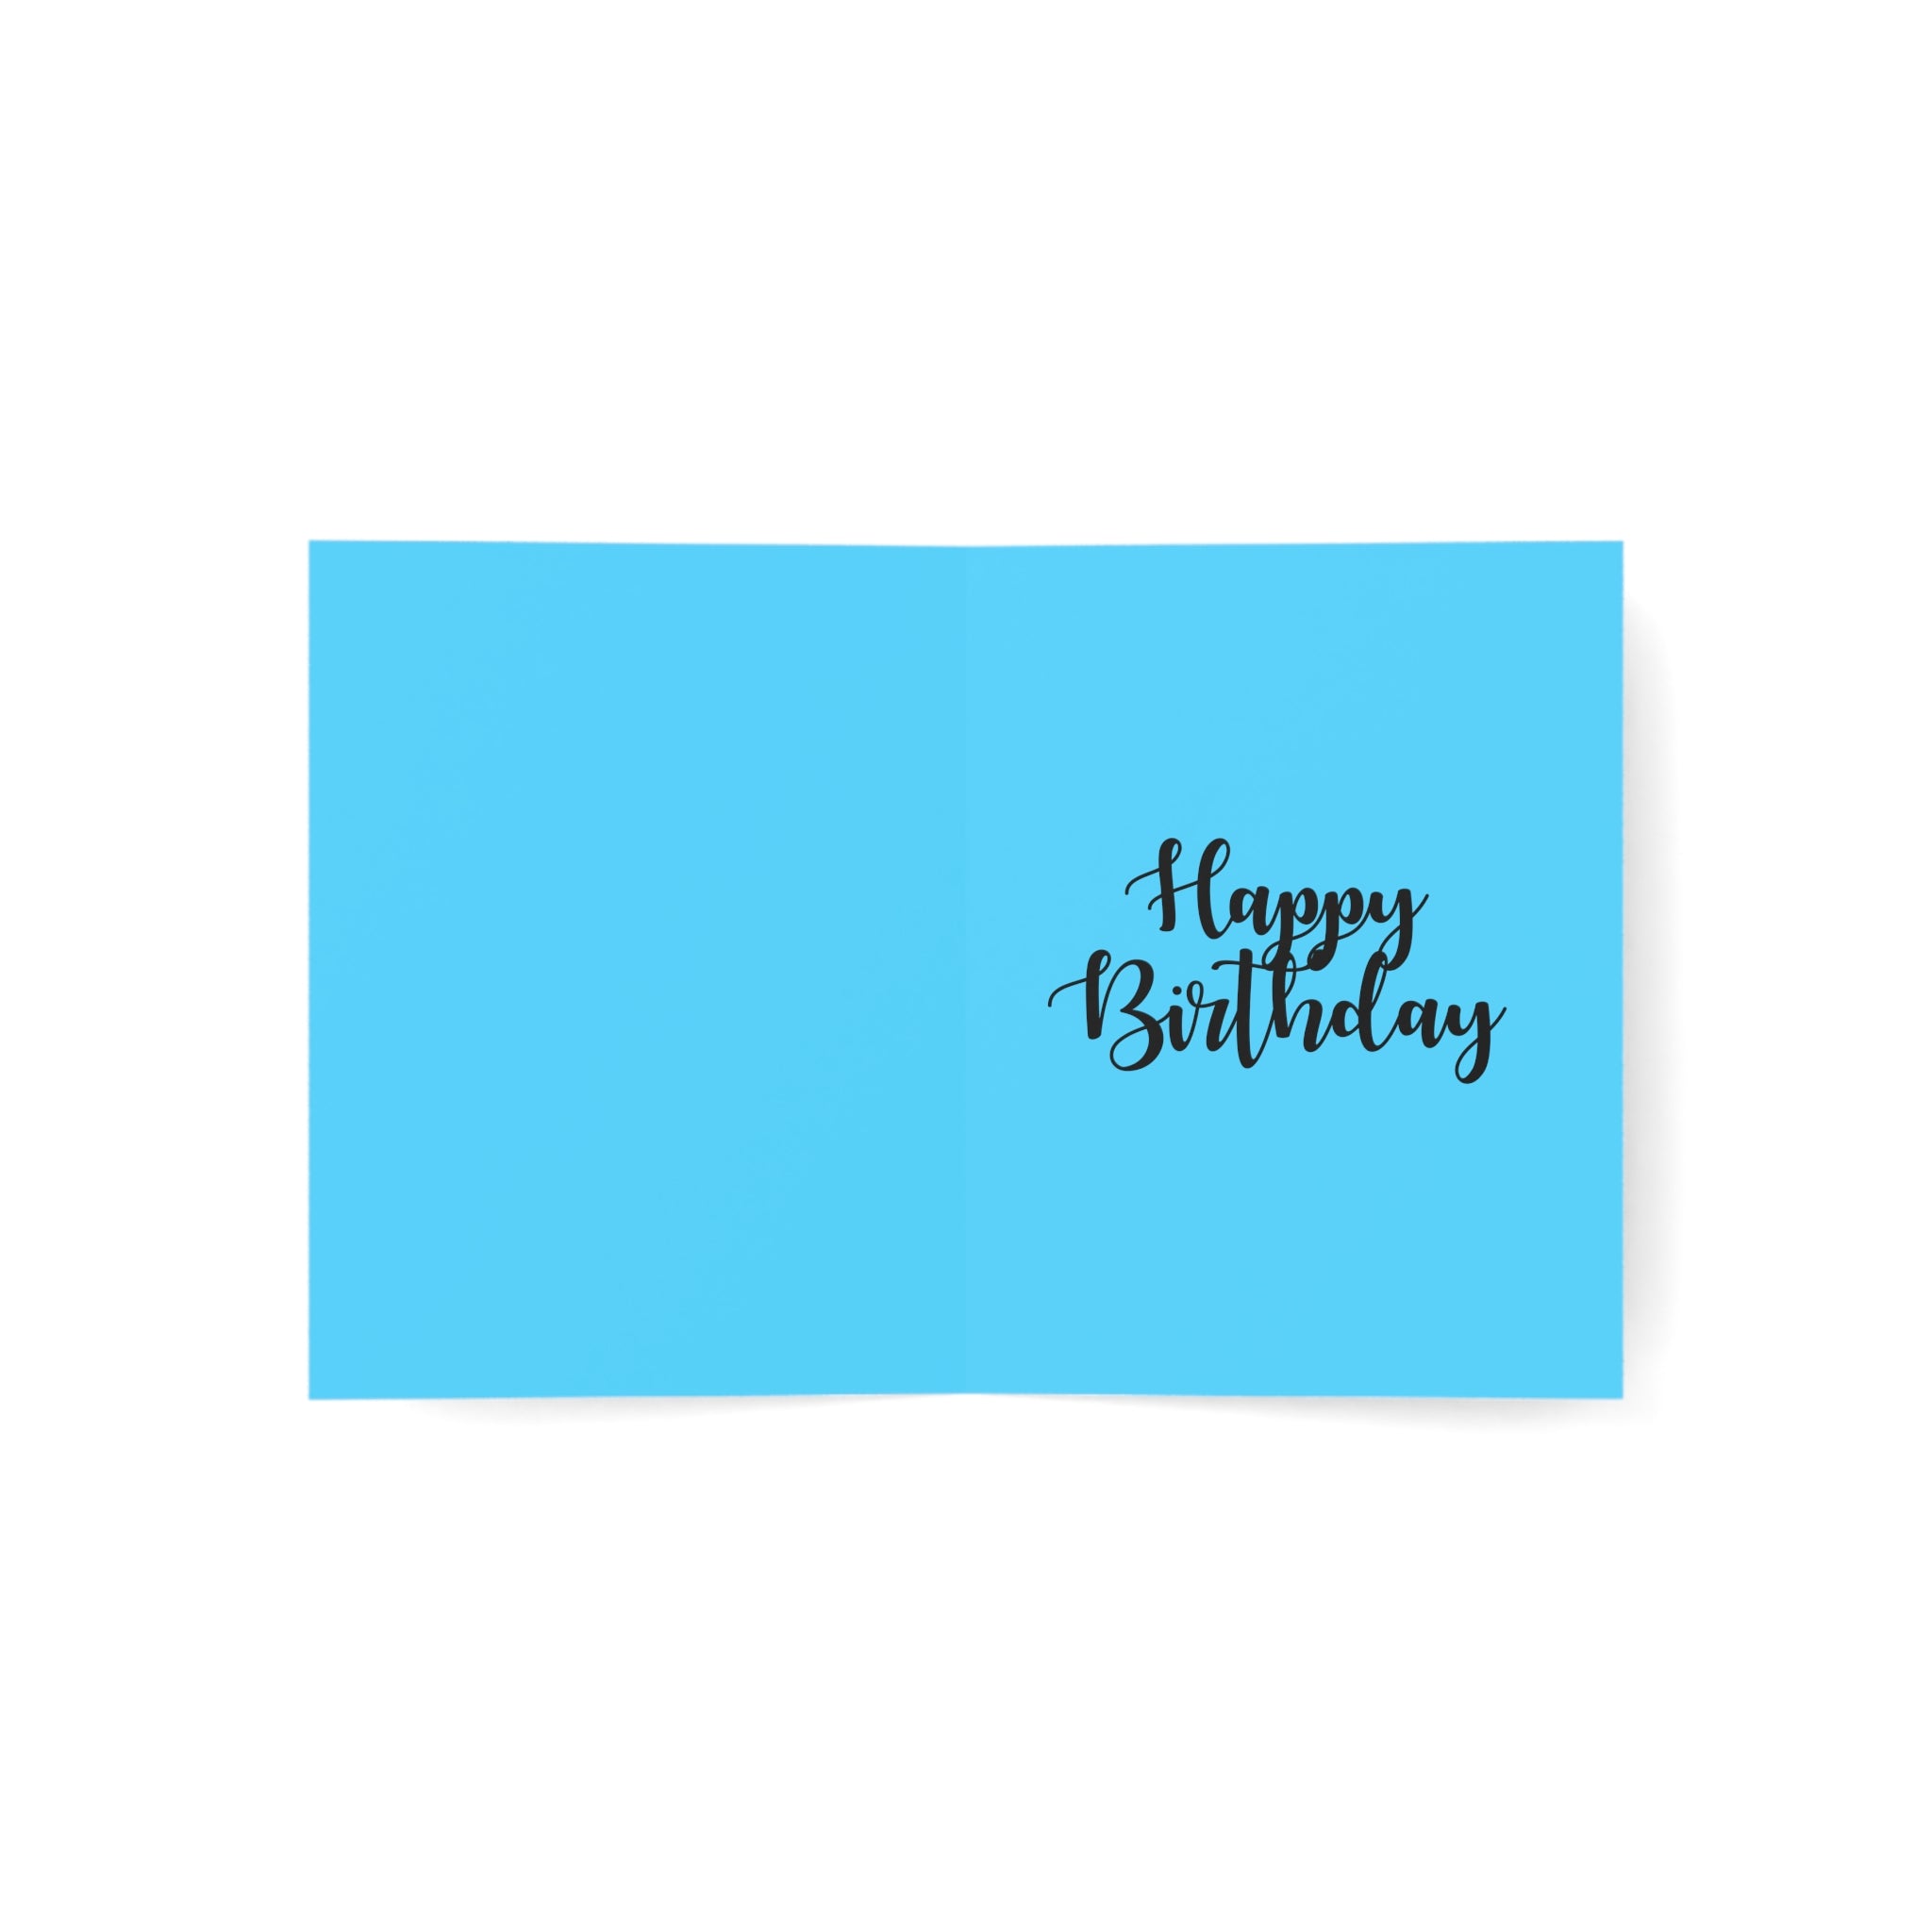 Schitt's Creek Happy Birthday Greeting Cards (1, 10, 30, and 50pcs)